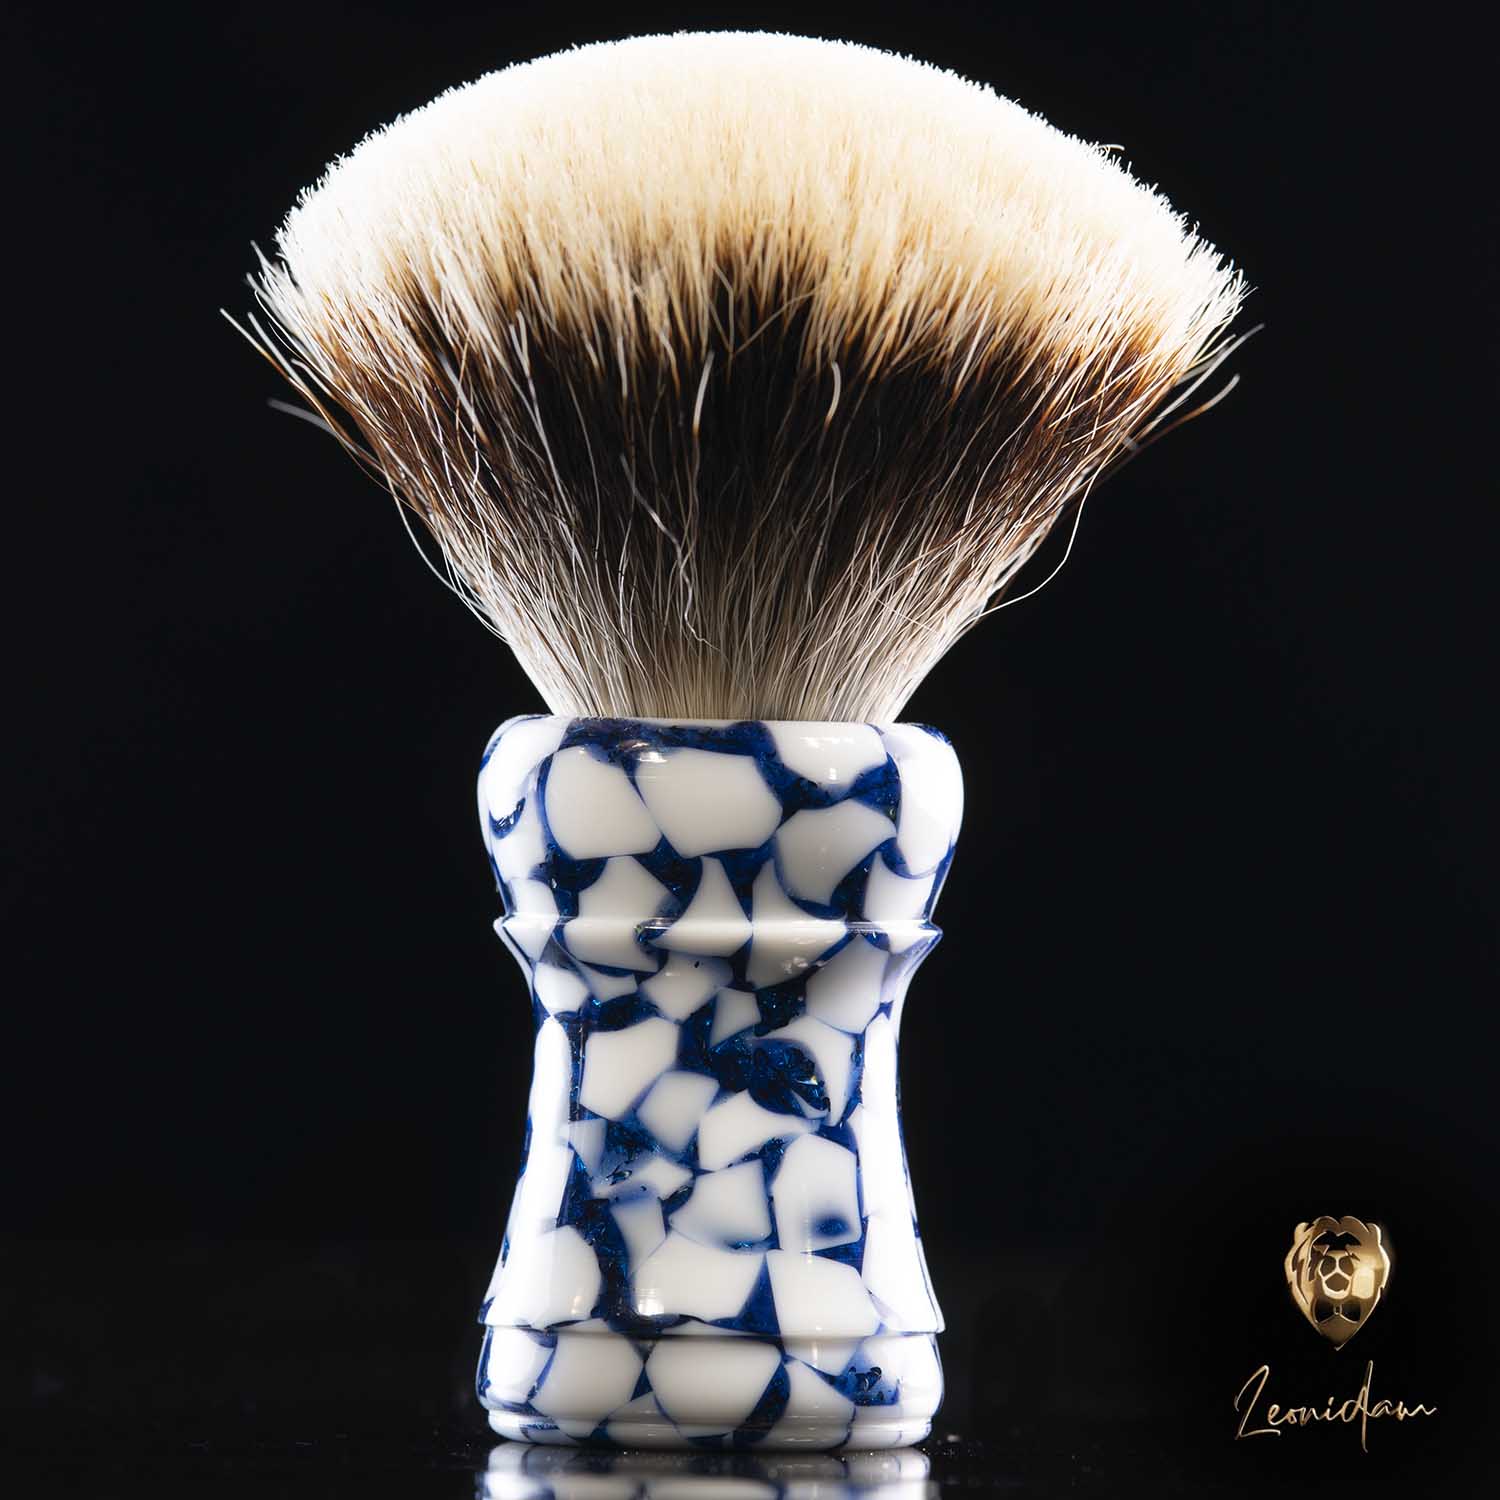 Handmade Shaving Brush "Hammam" 26/28mm